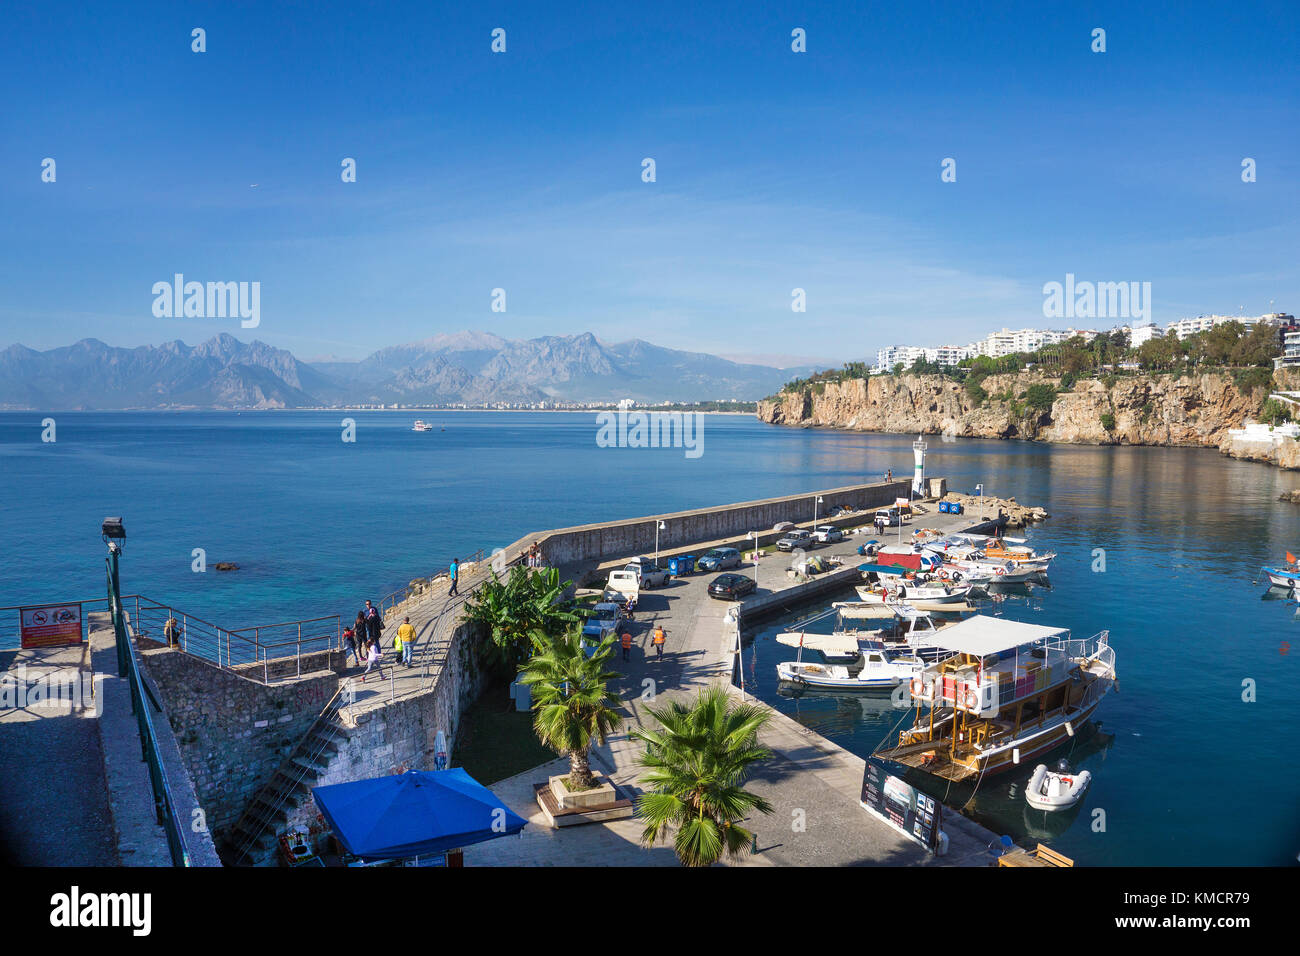 Boats at the harbour, old town Kaleici, Antalya, turkish riviera, Turkey Stock Photo